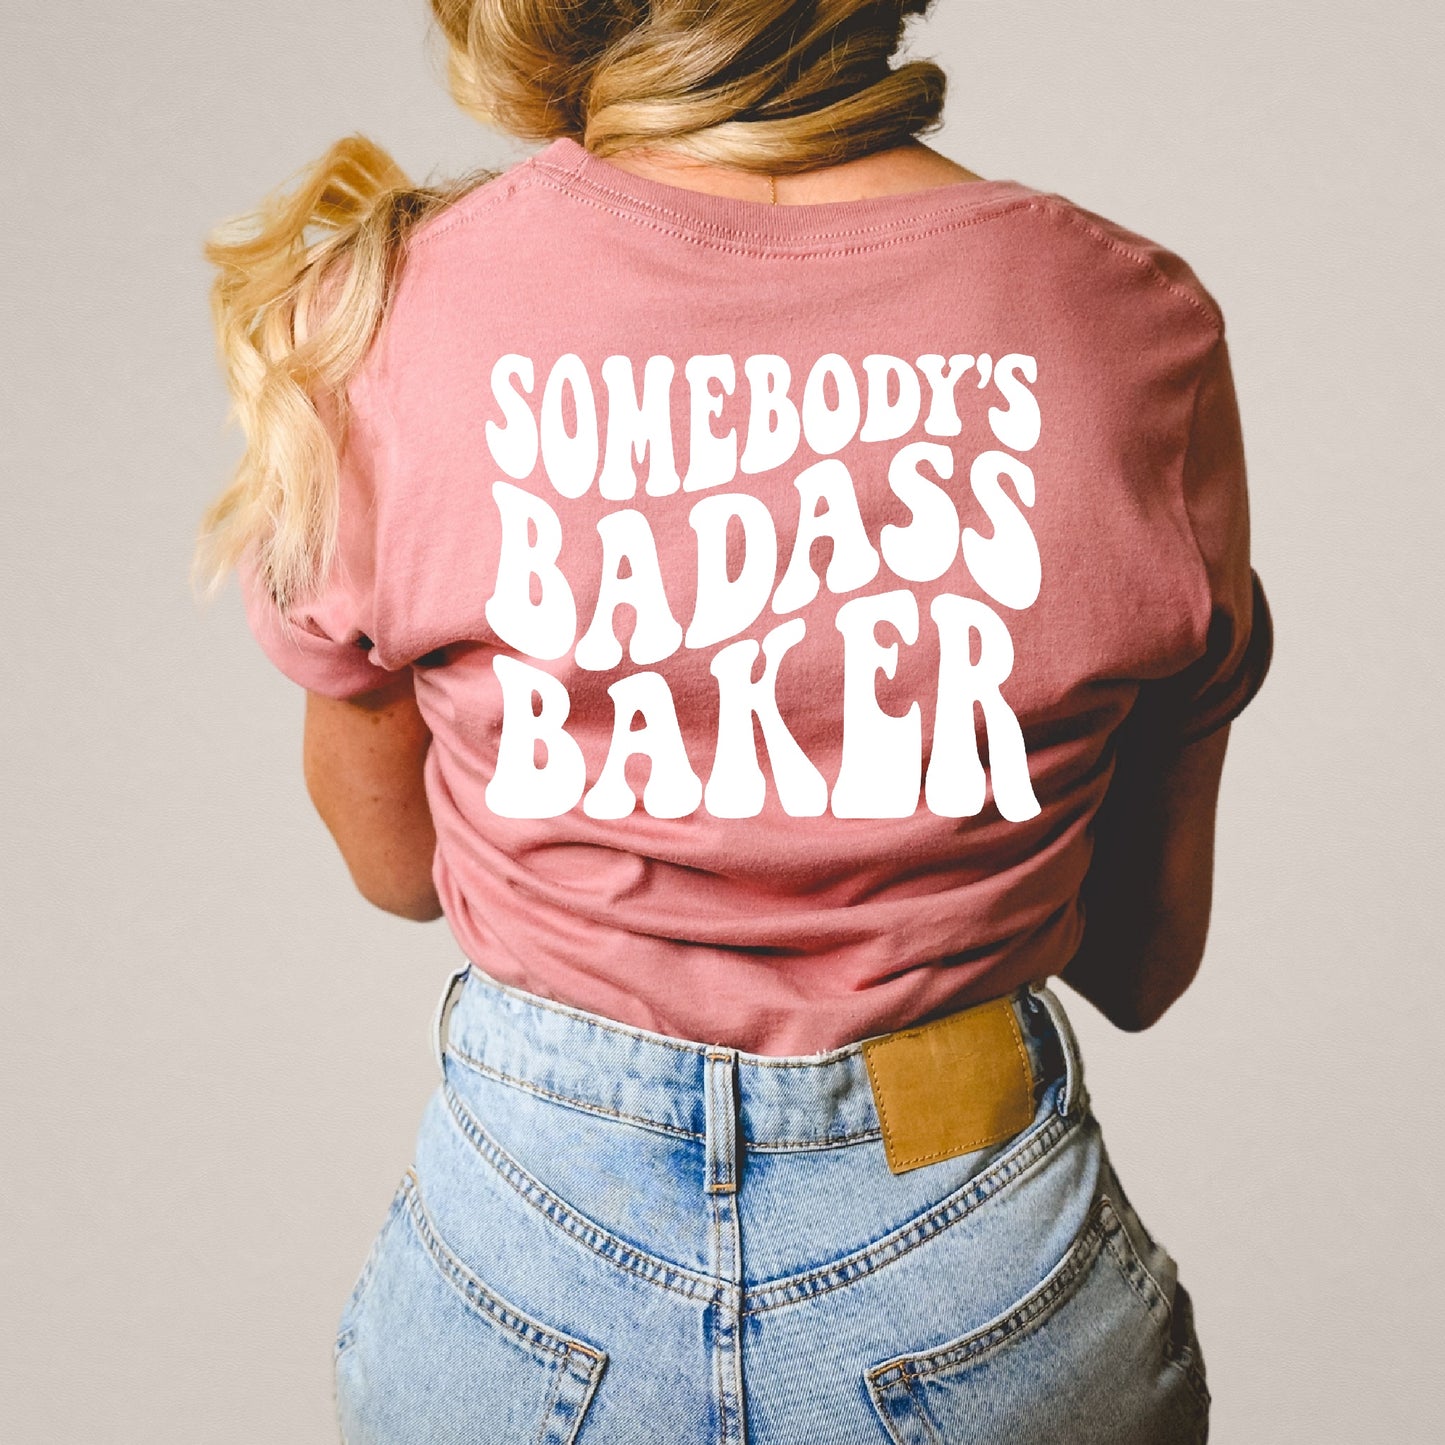 Somebody's Badass Baker Embroidered Unisex Tee